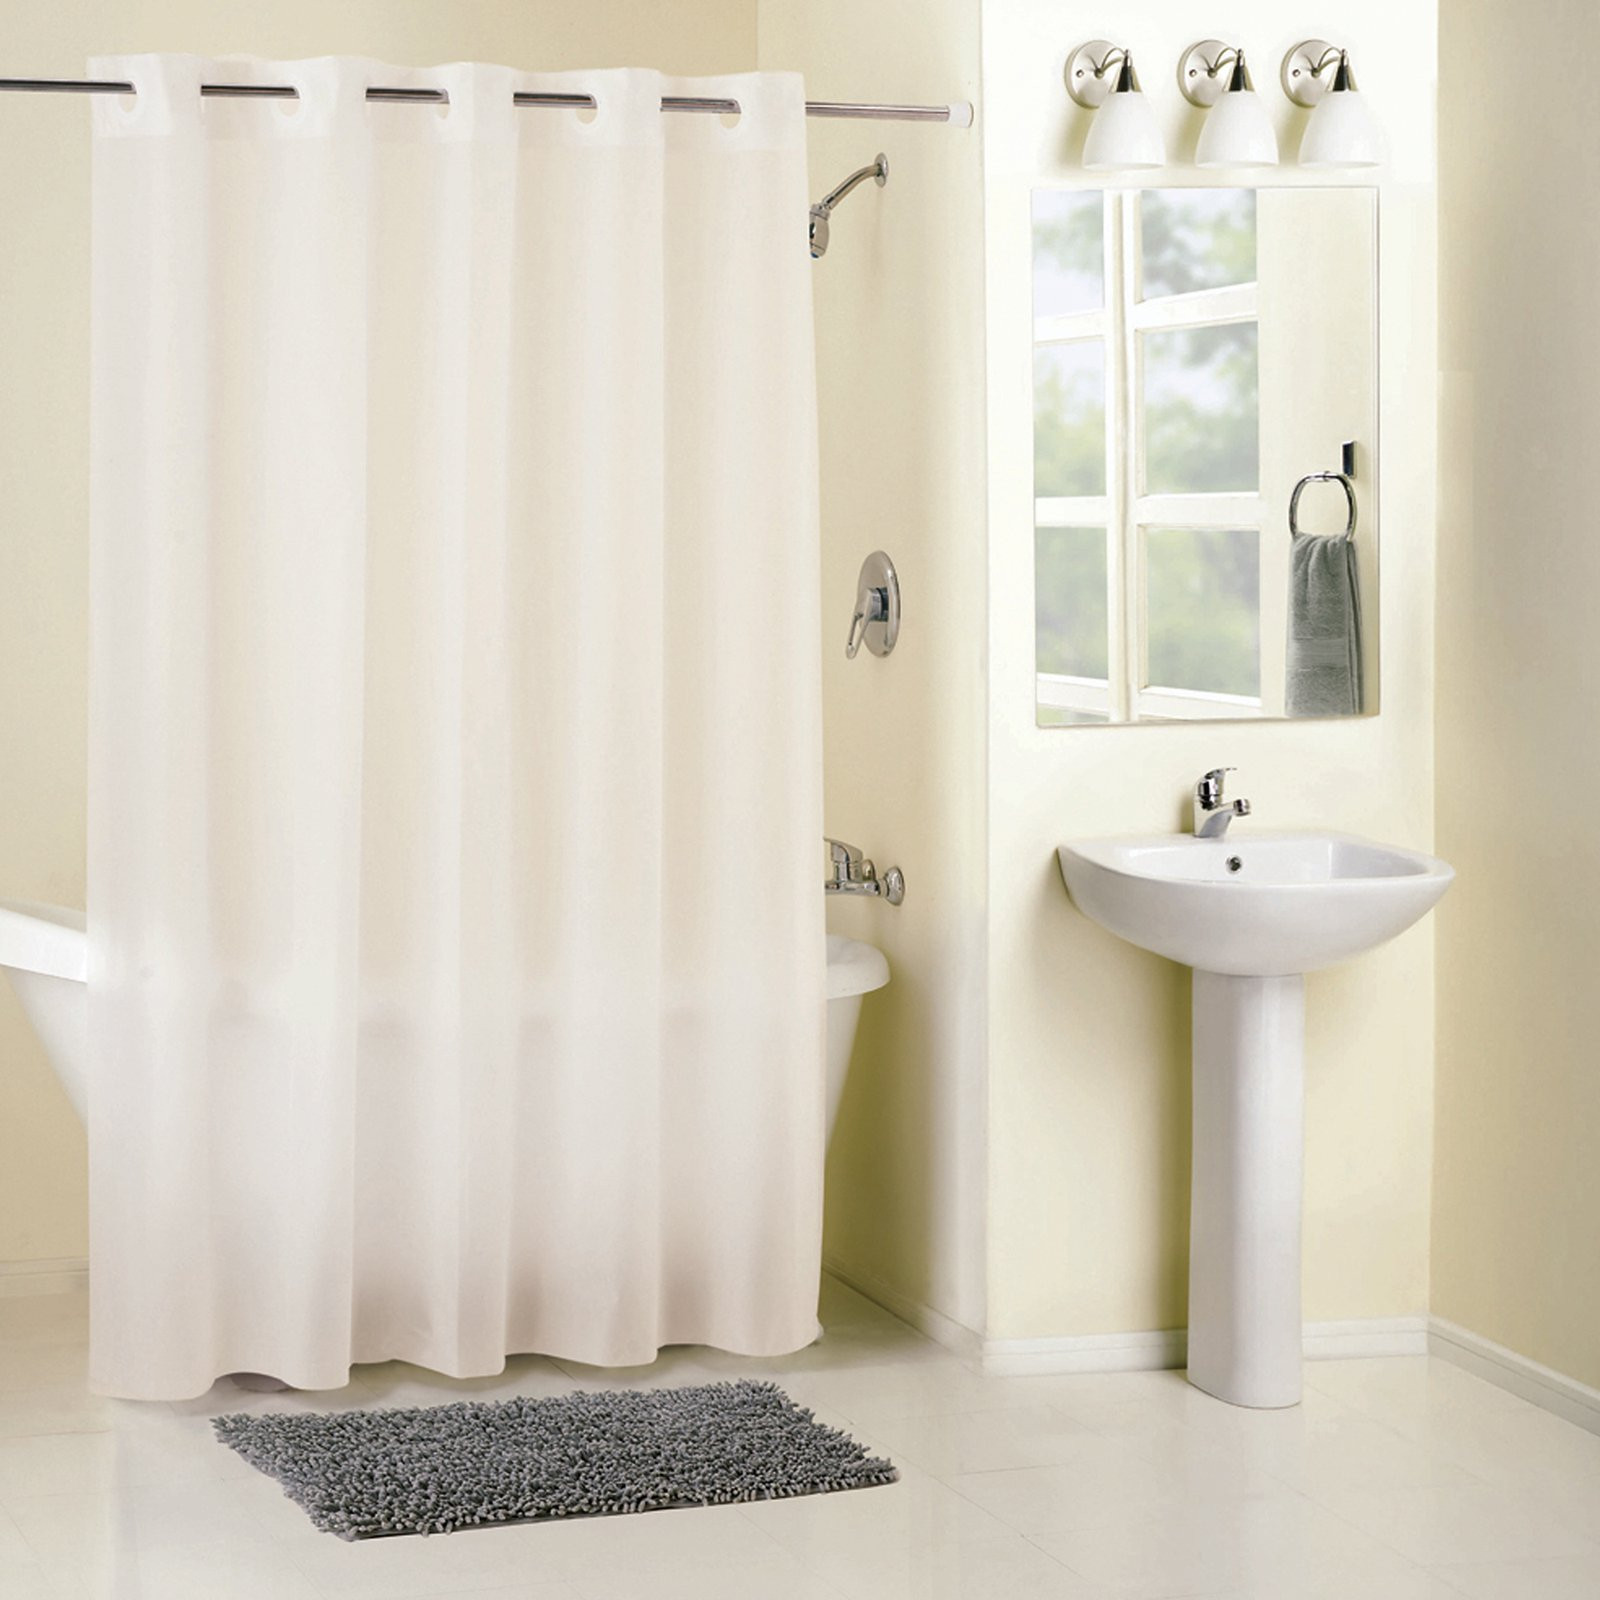 Kohls Bathroom Shower Curtains
 kohls hookless shower curtains